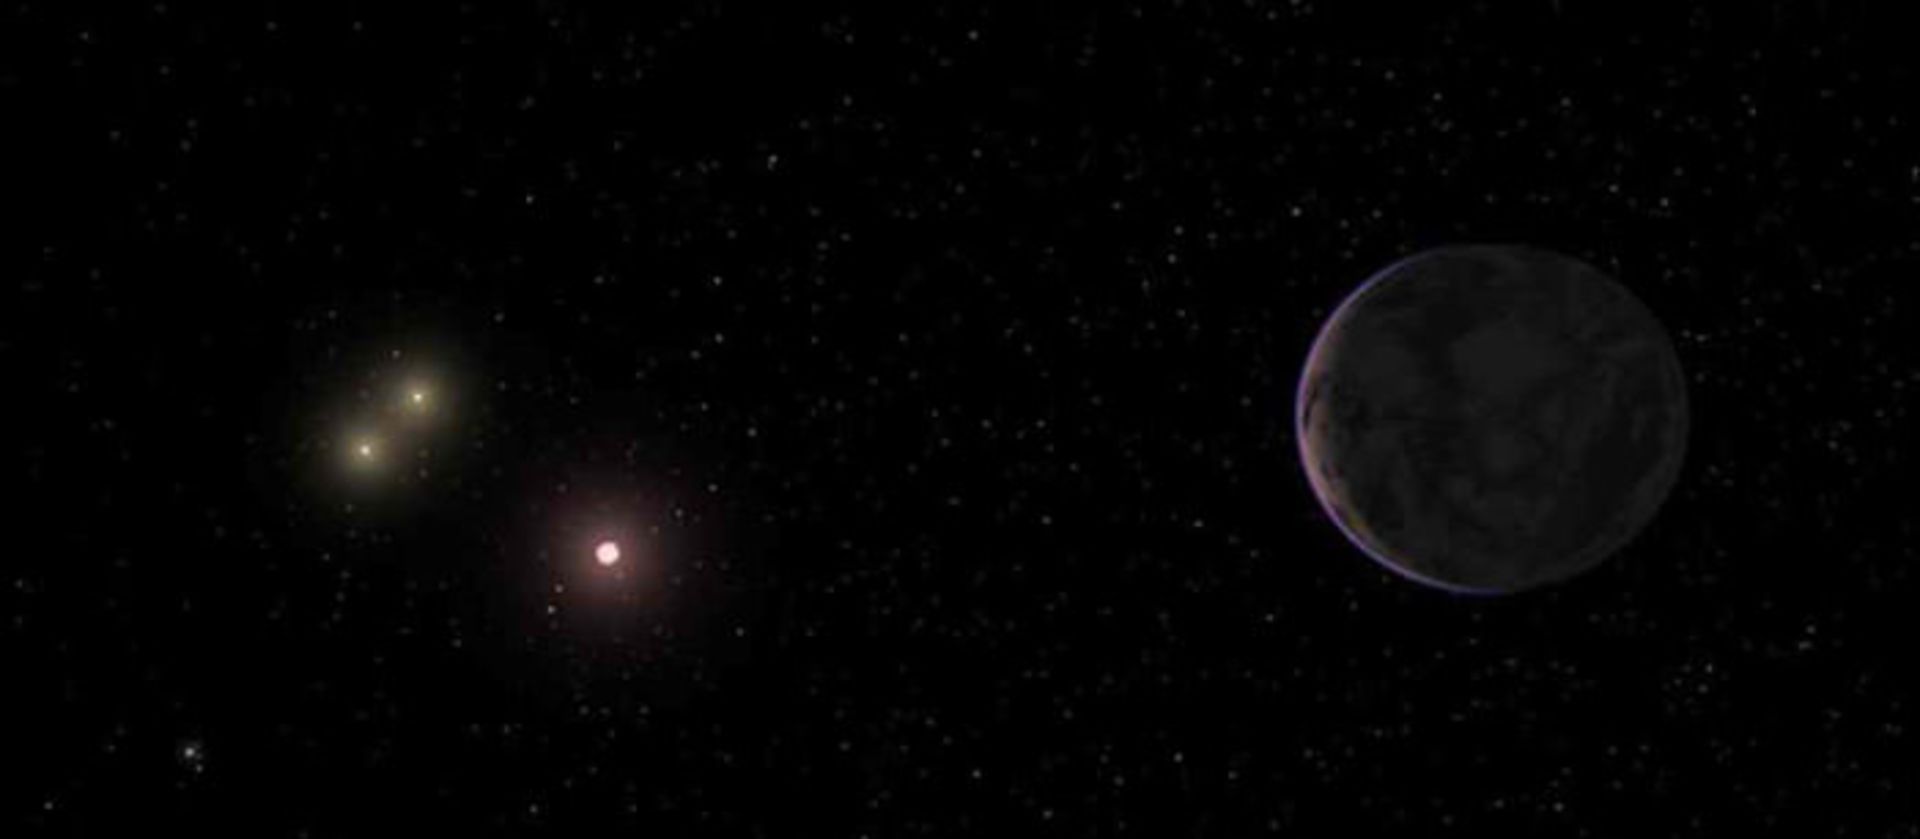 alien-planet-GJ667Cc-habitable-zone